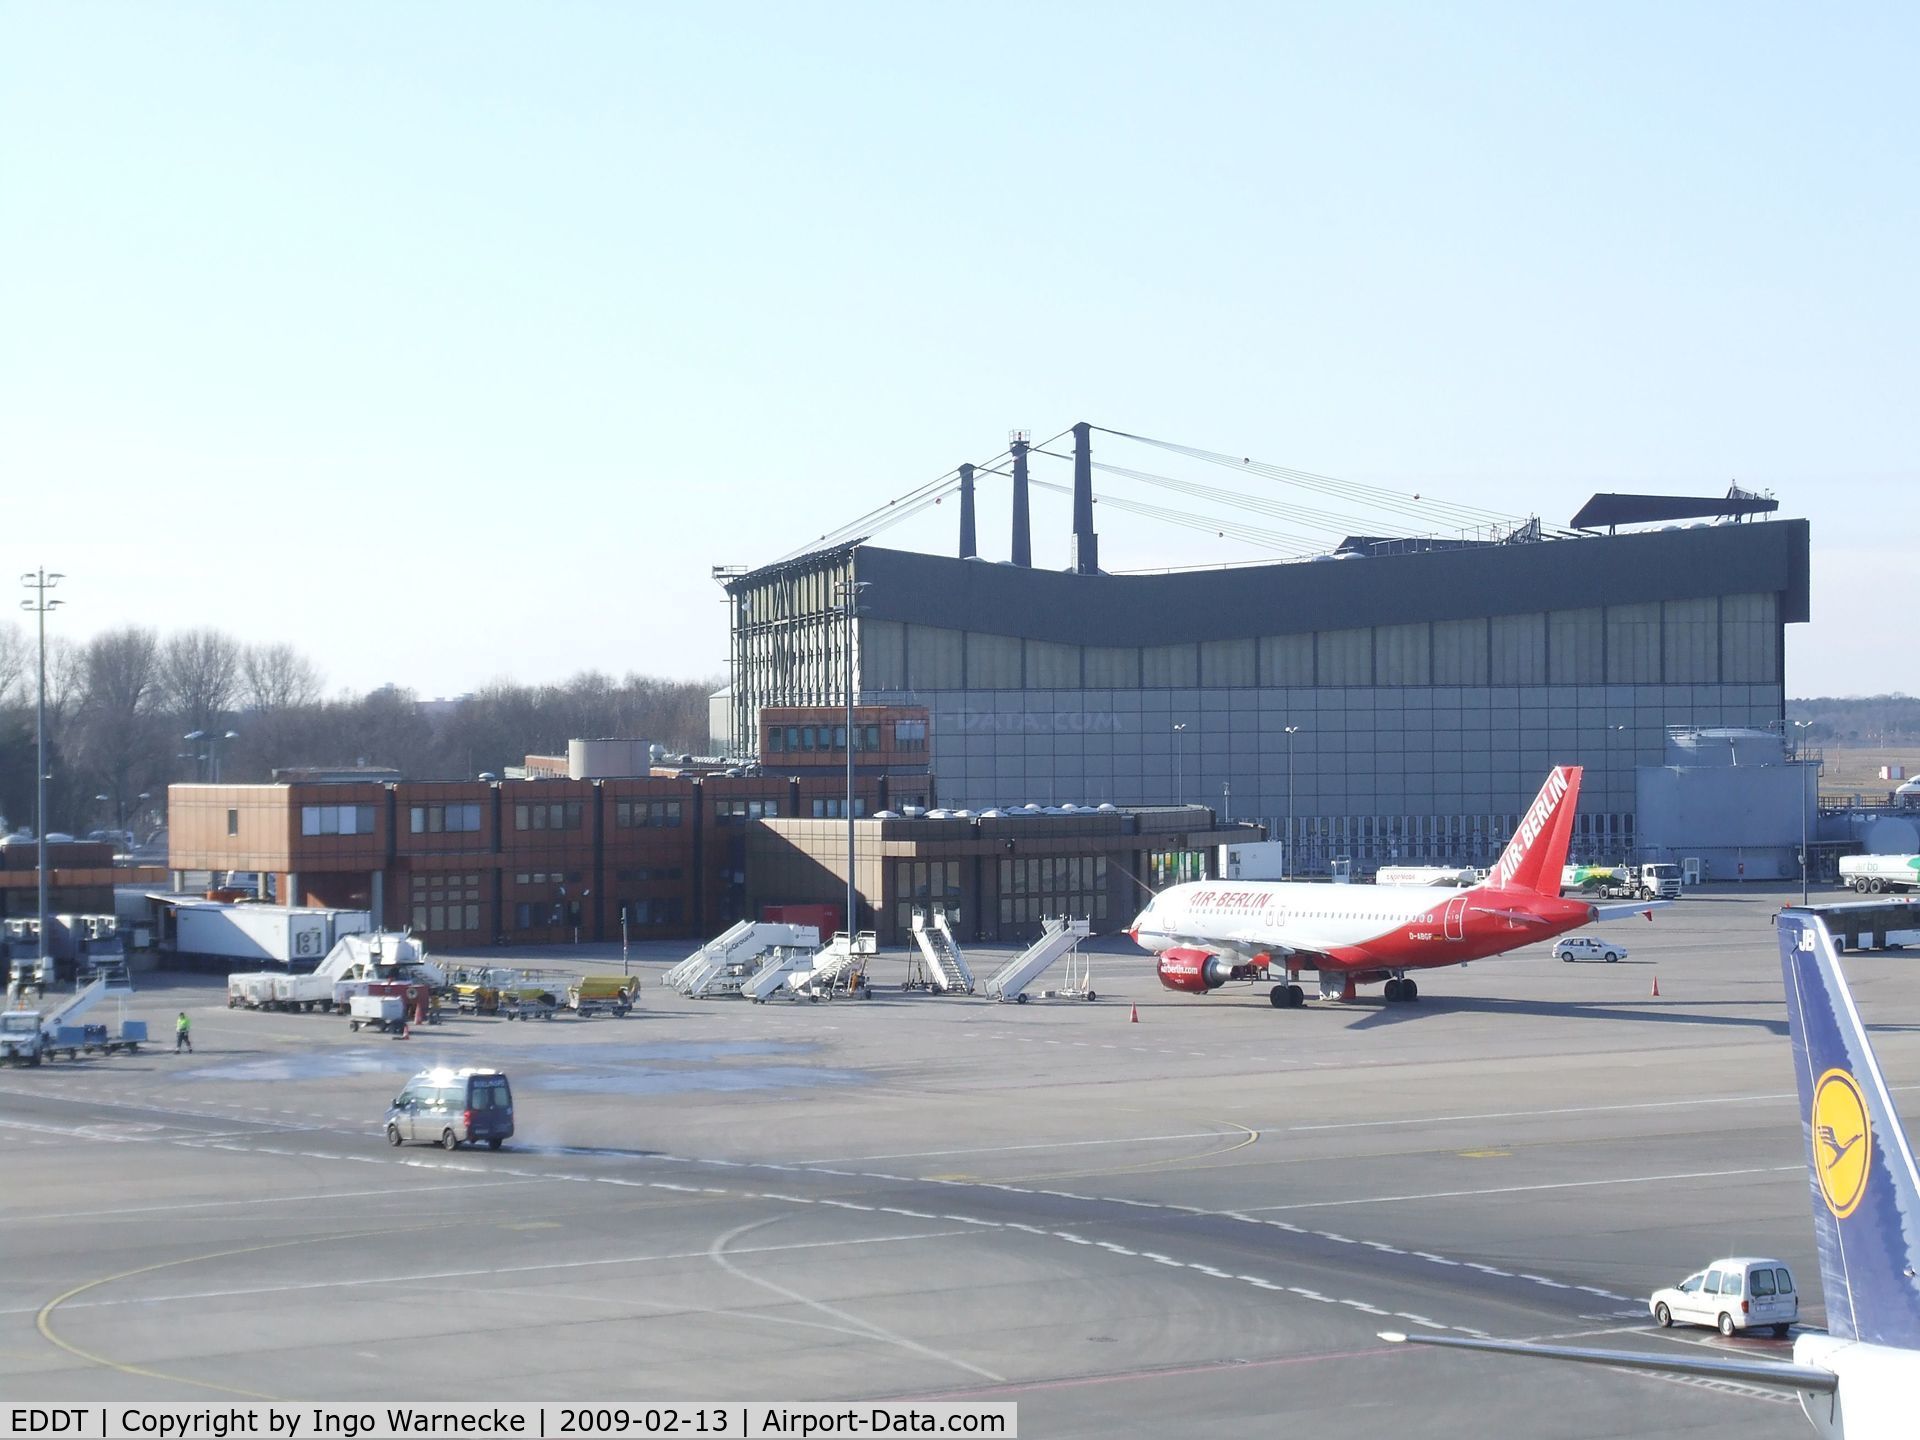 Tegel International Airport (closing in 2011), Berlin Germany (EDDT) - Berlin Tegel, Lufthansa maintenance hangar west of the terminal